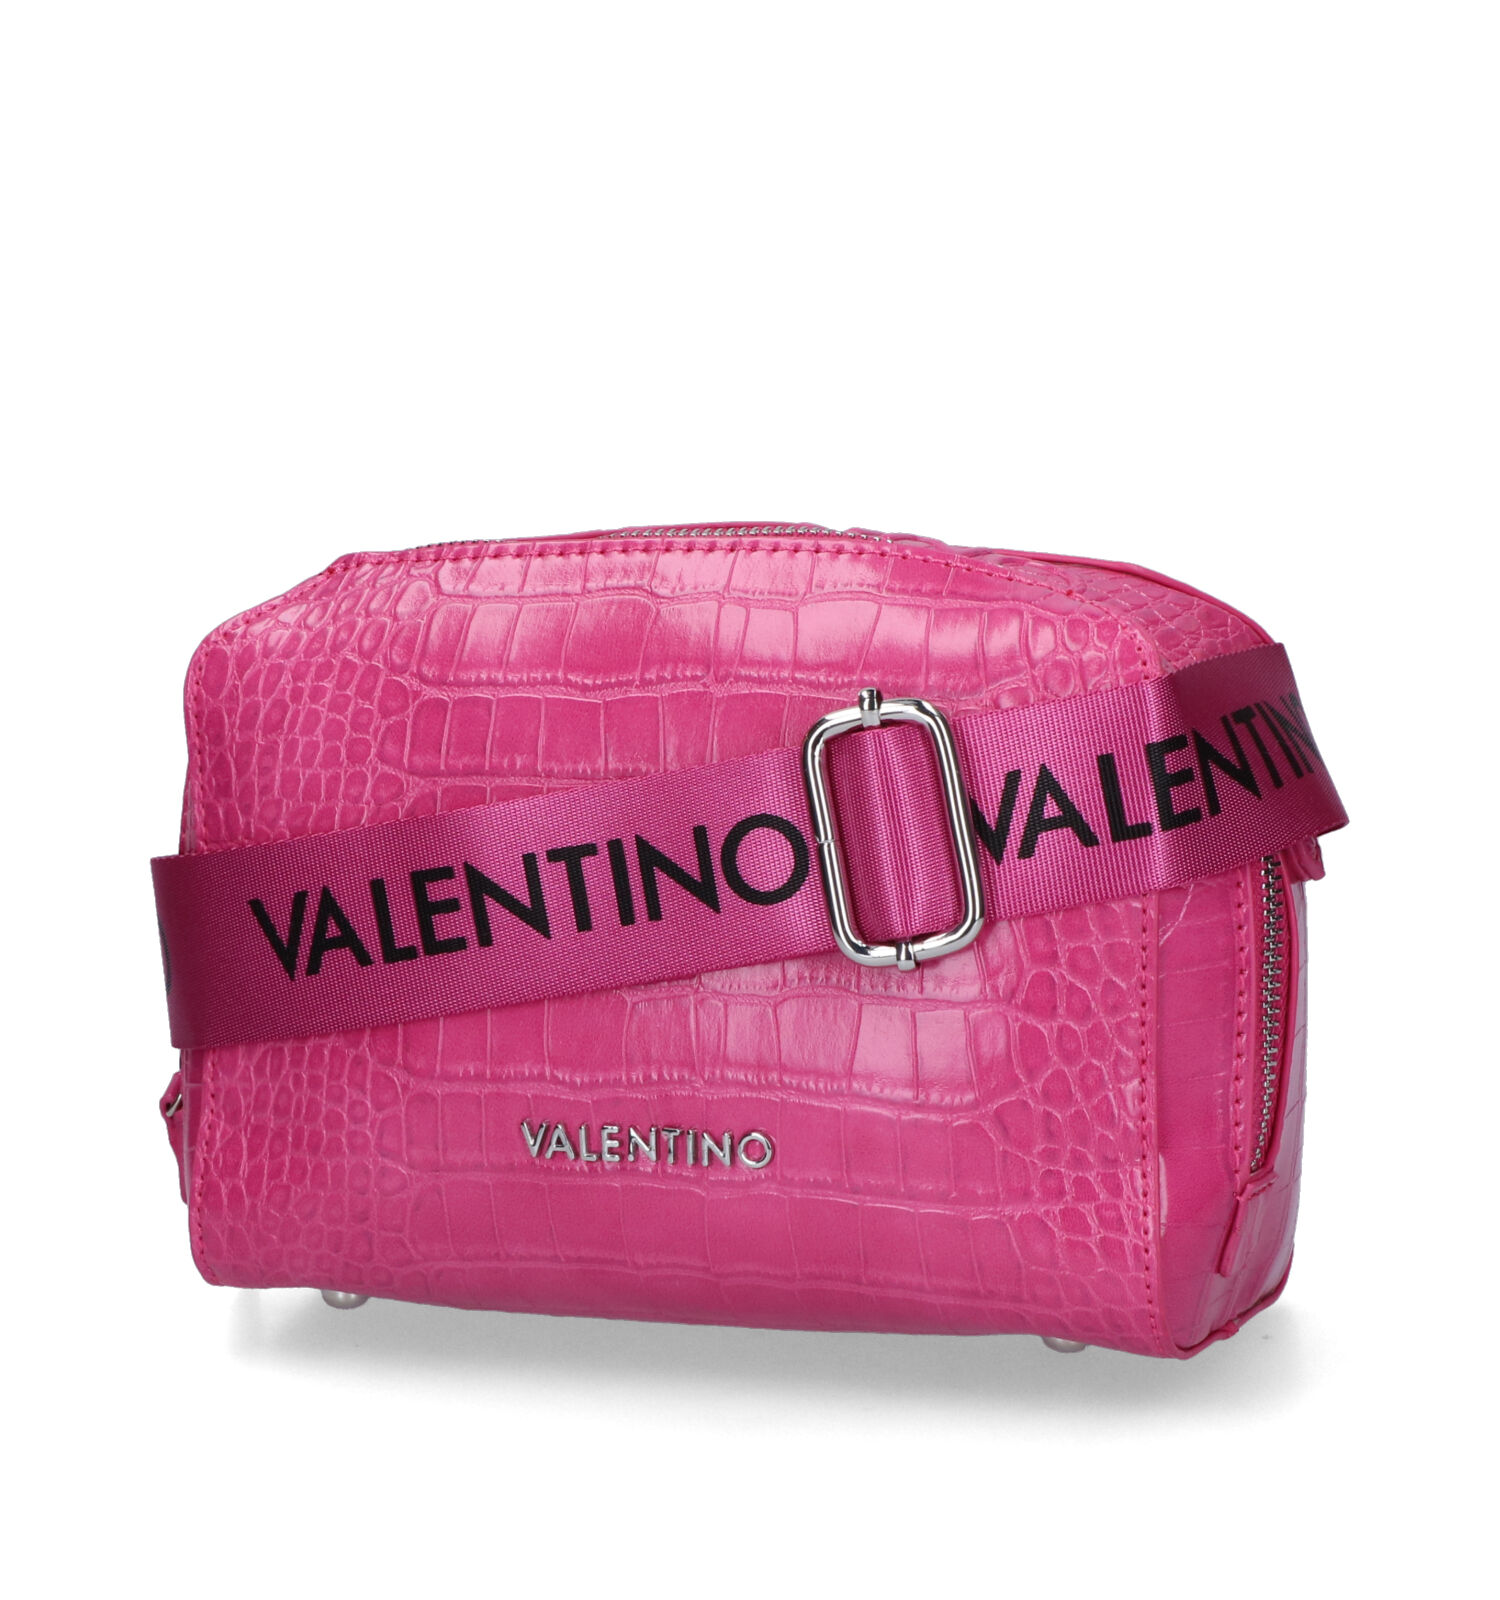 achterlijk persoon Bederven restaurant Valentino Handbags Pattie Roze Crossbody Tas | Dames Crossbody tassen